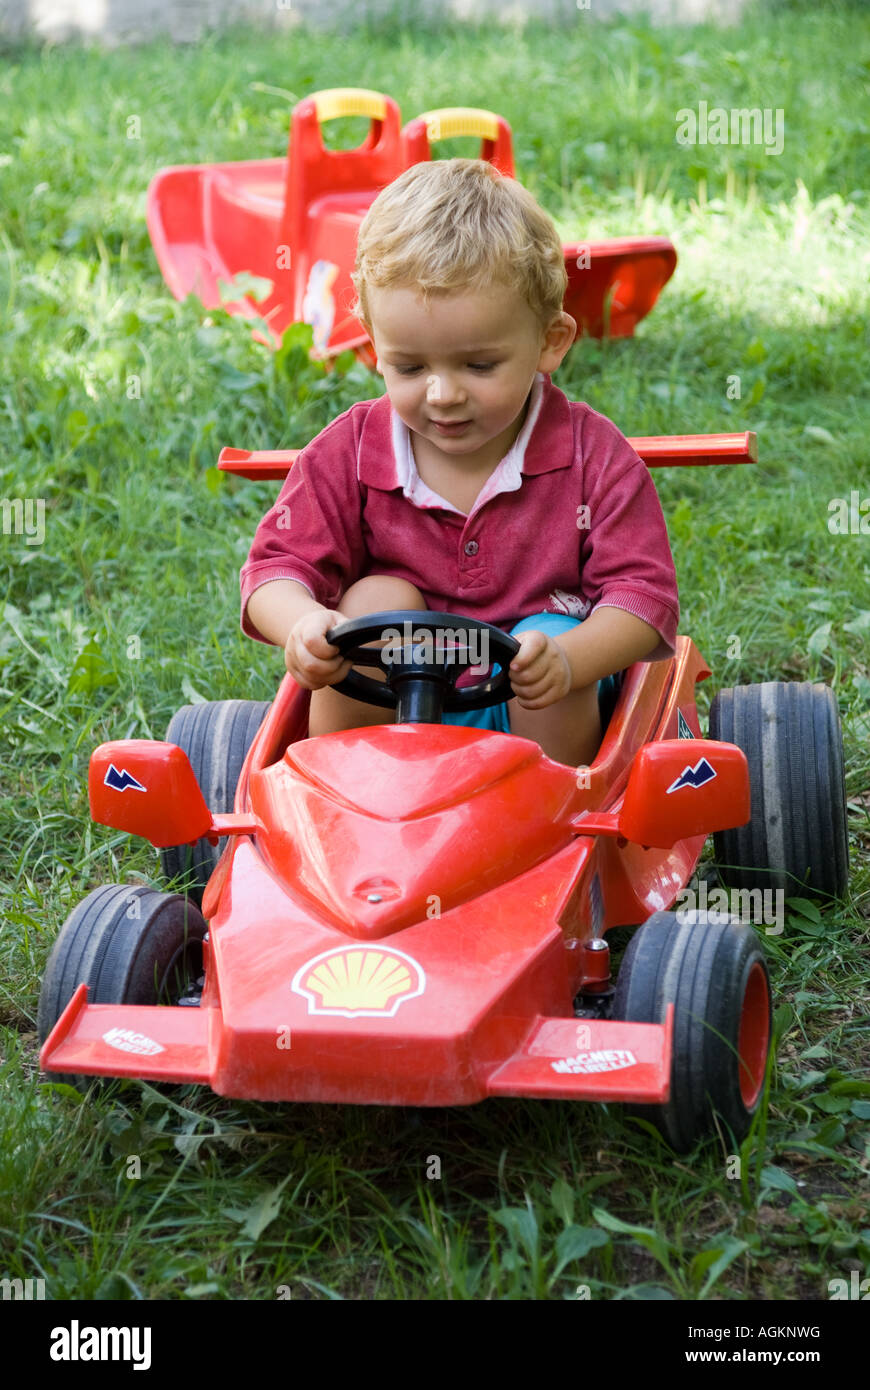 Little baby driving a red Ferrari car. Stock Photo